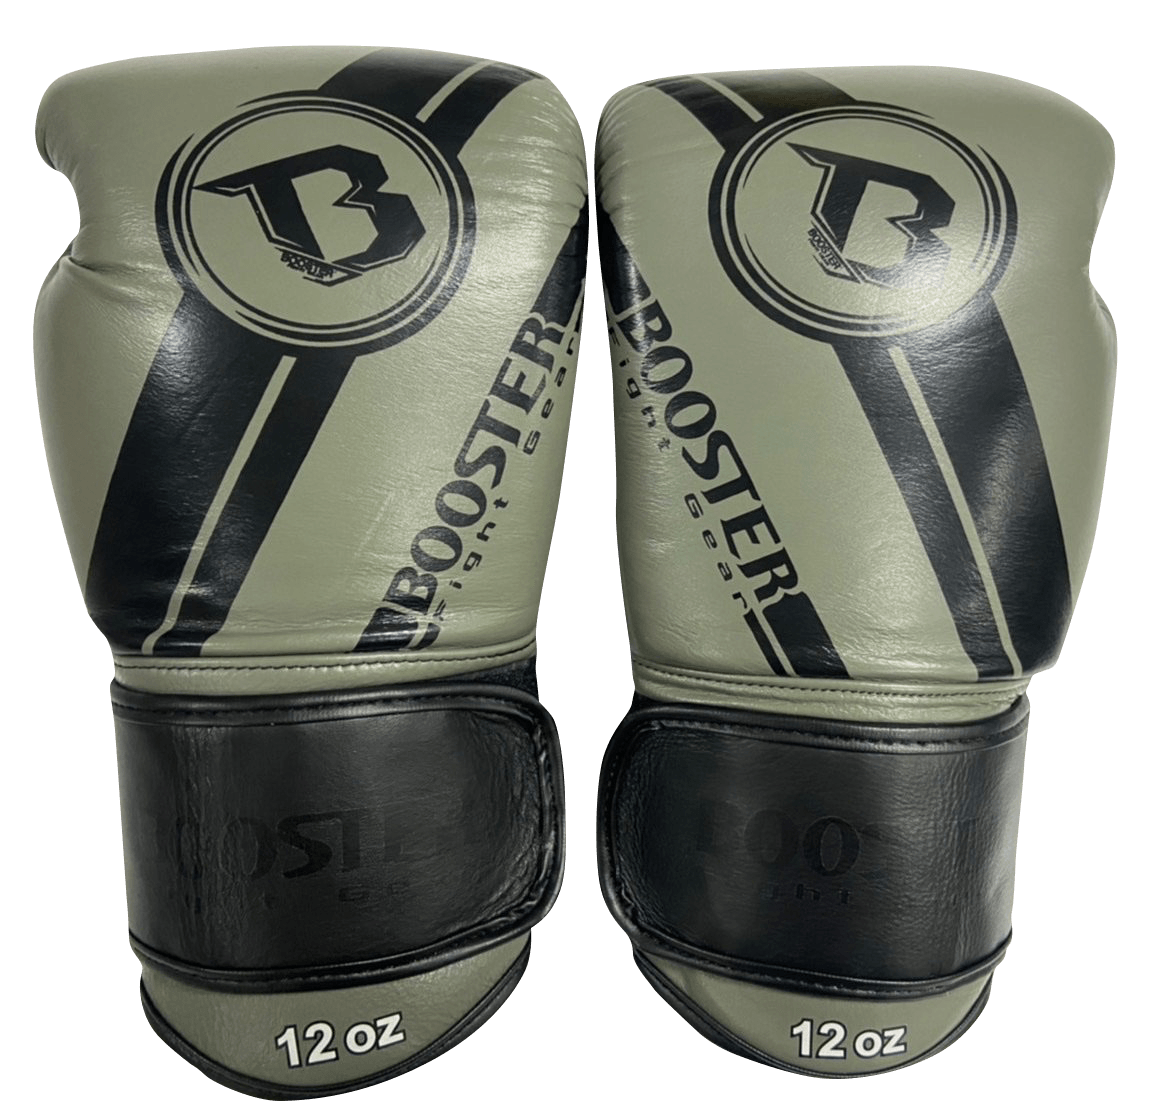 Booster Boxing Gloves BGLV3 GY BK